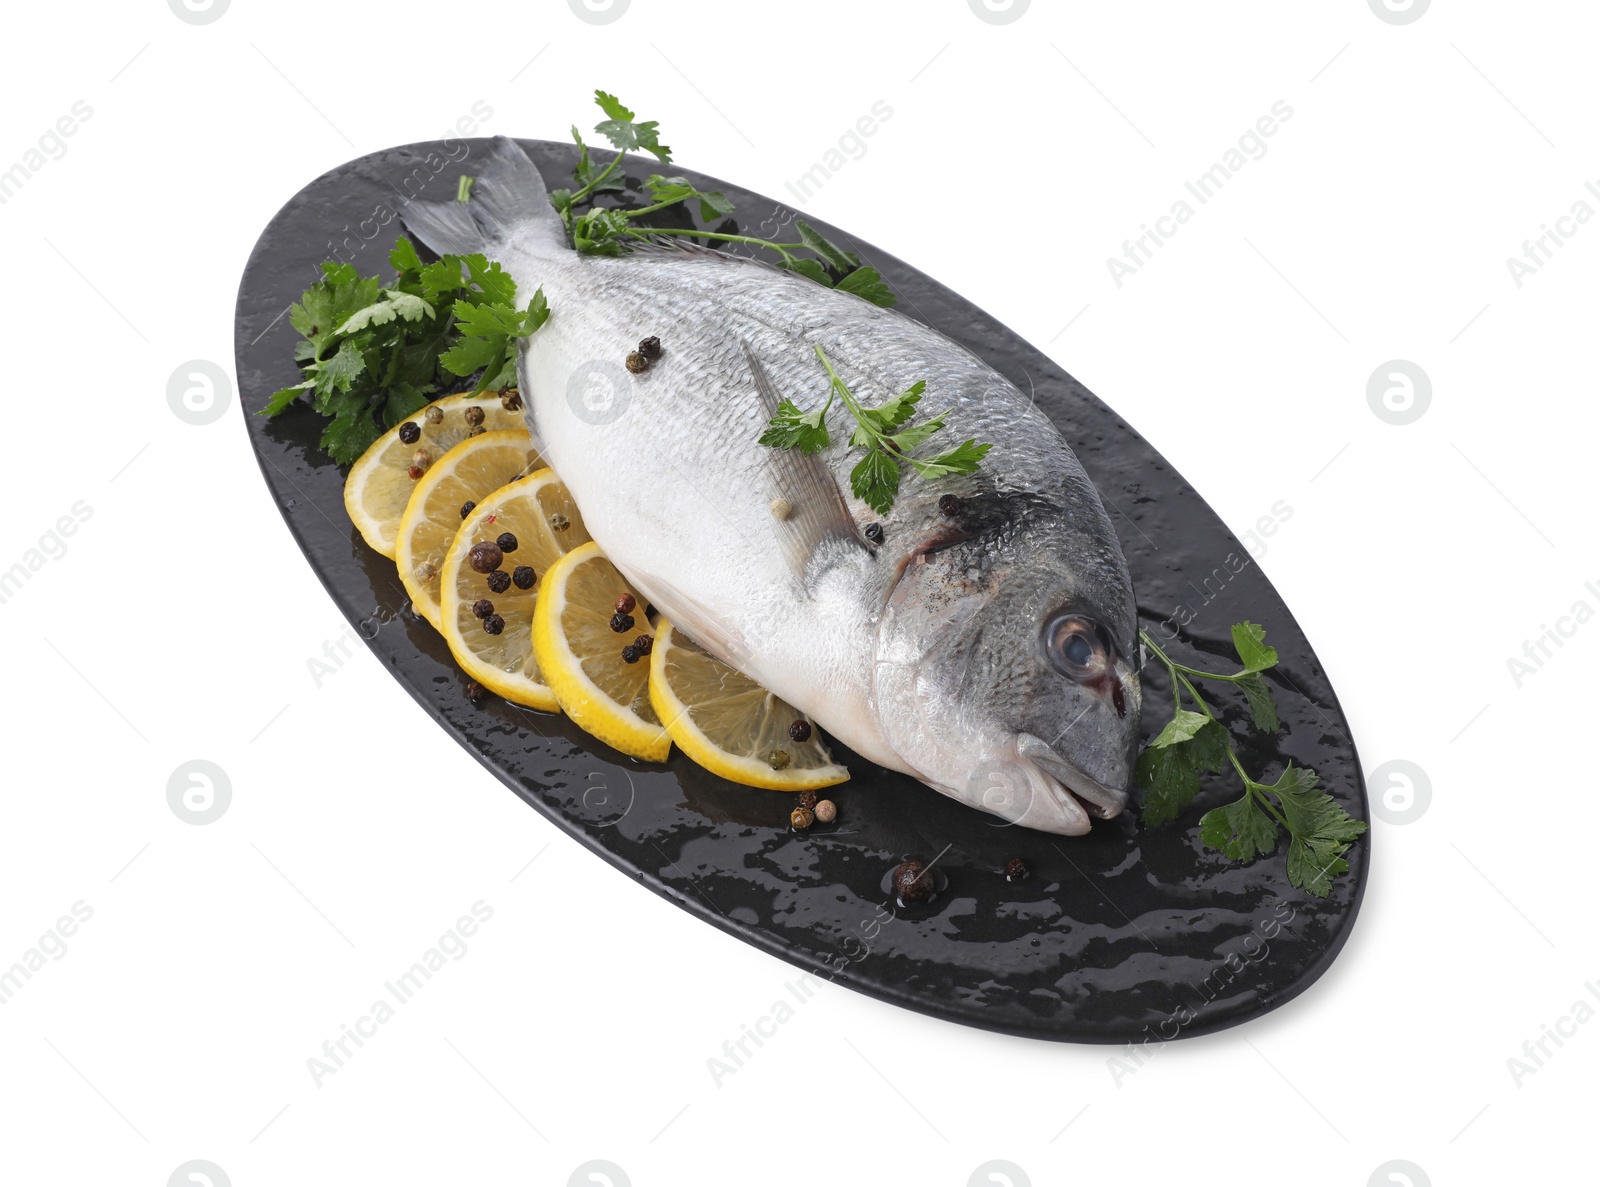 Photo of Raw dorado fish, parsley, lemon slices and peppercorns isolated on white